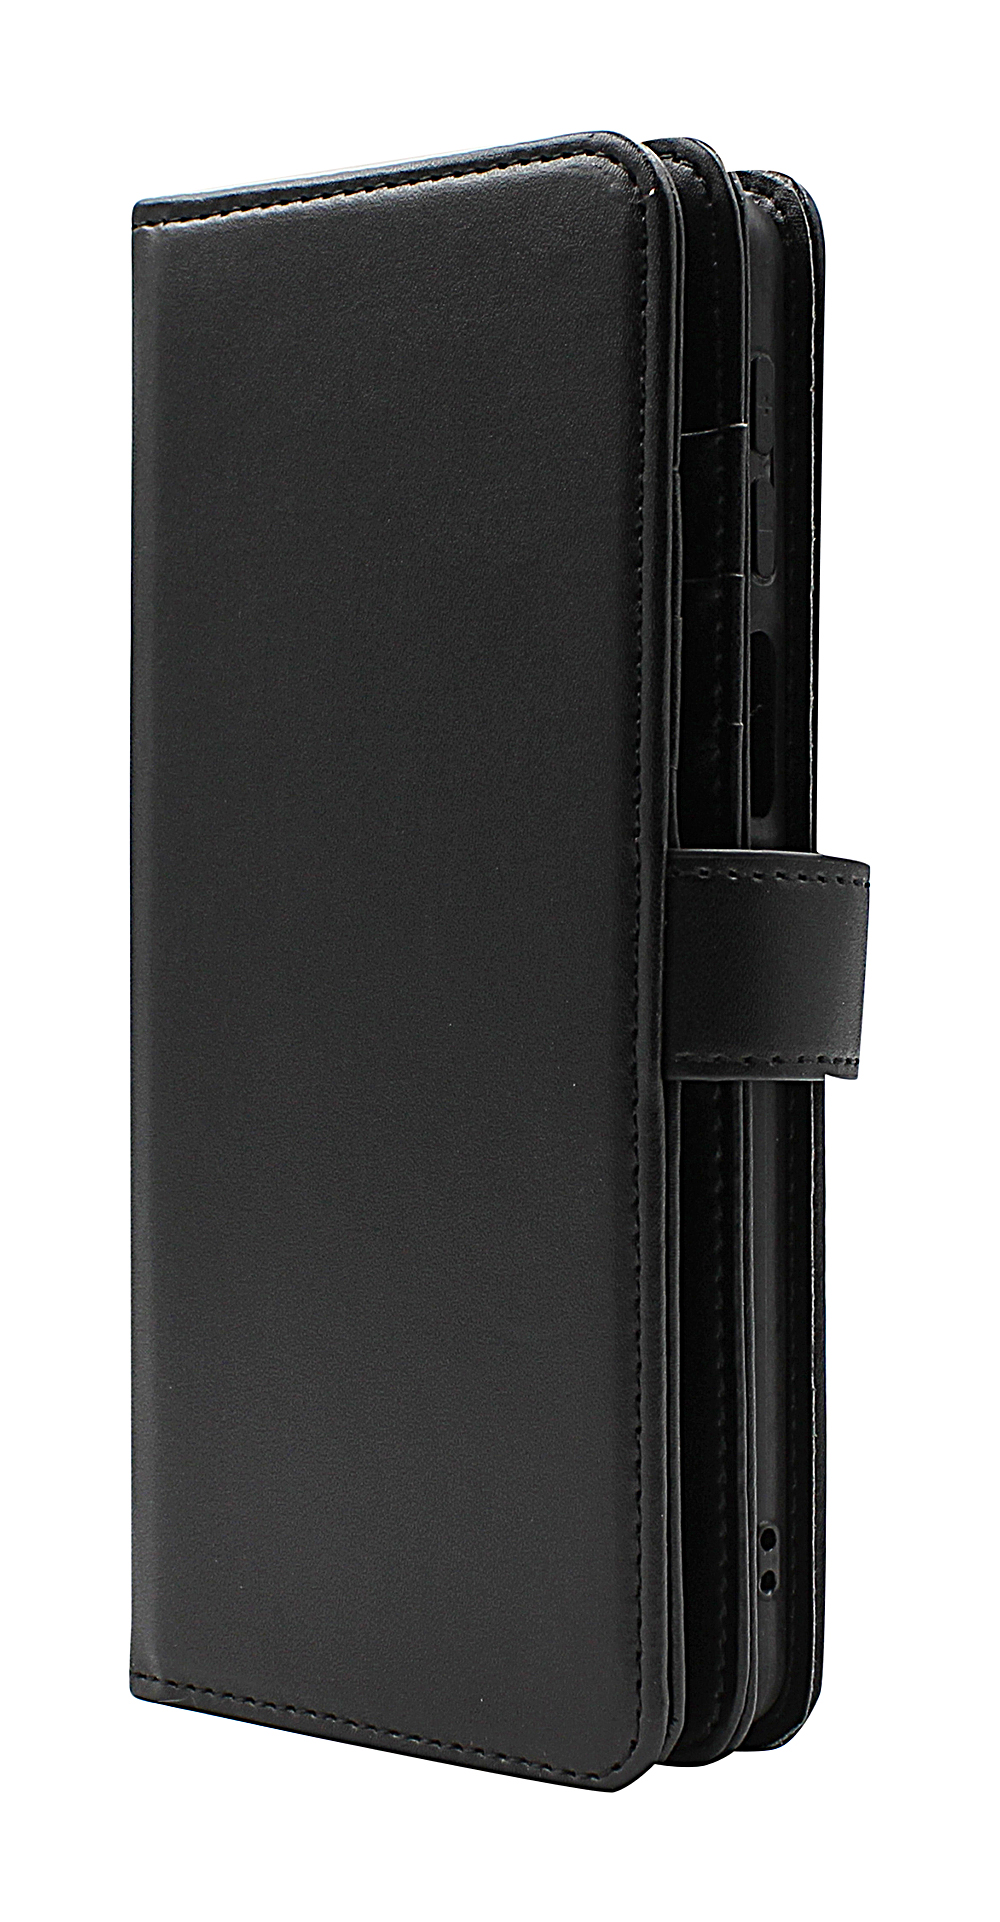 CoverInSkimblocker XL Wallet Motorola Edge 20